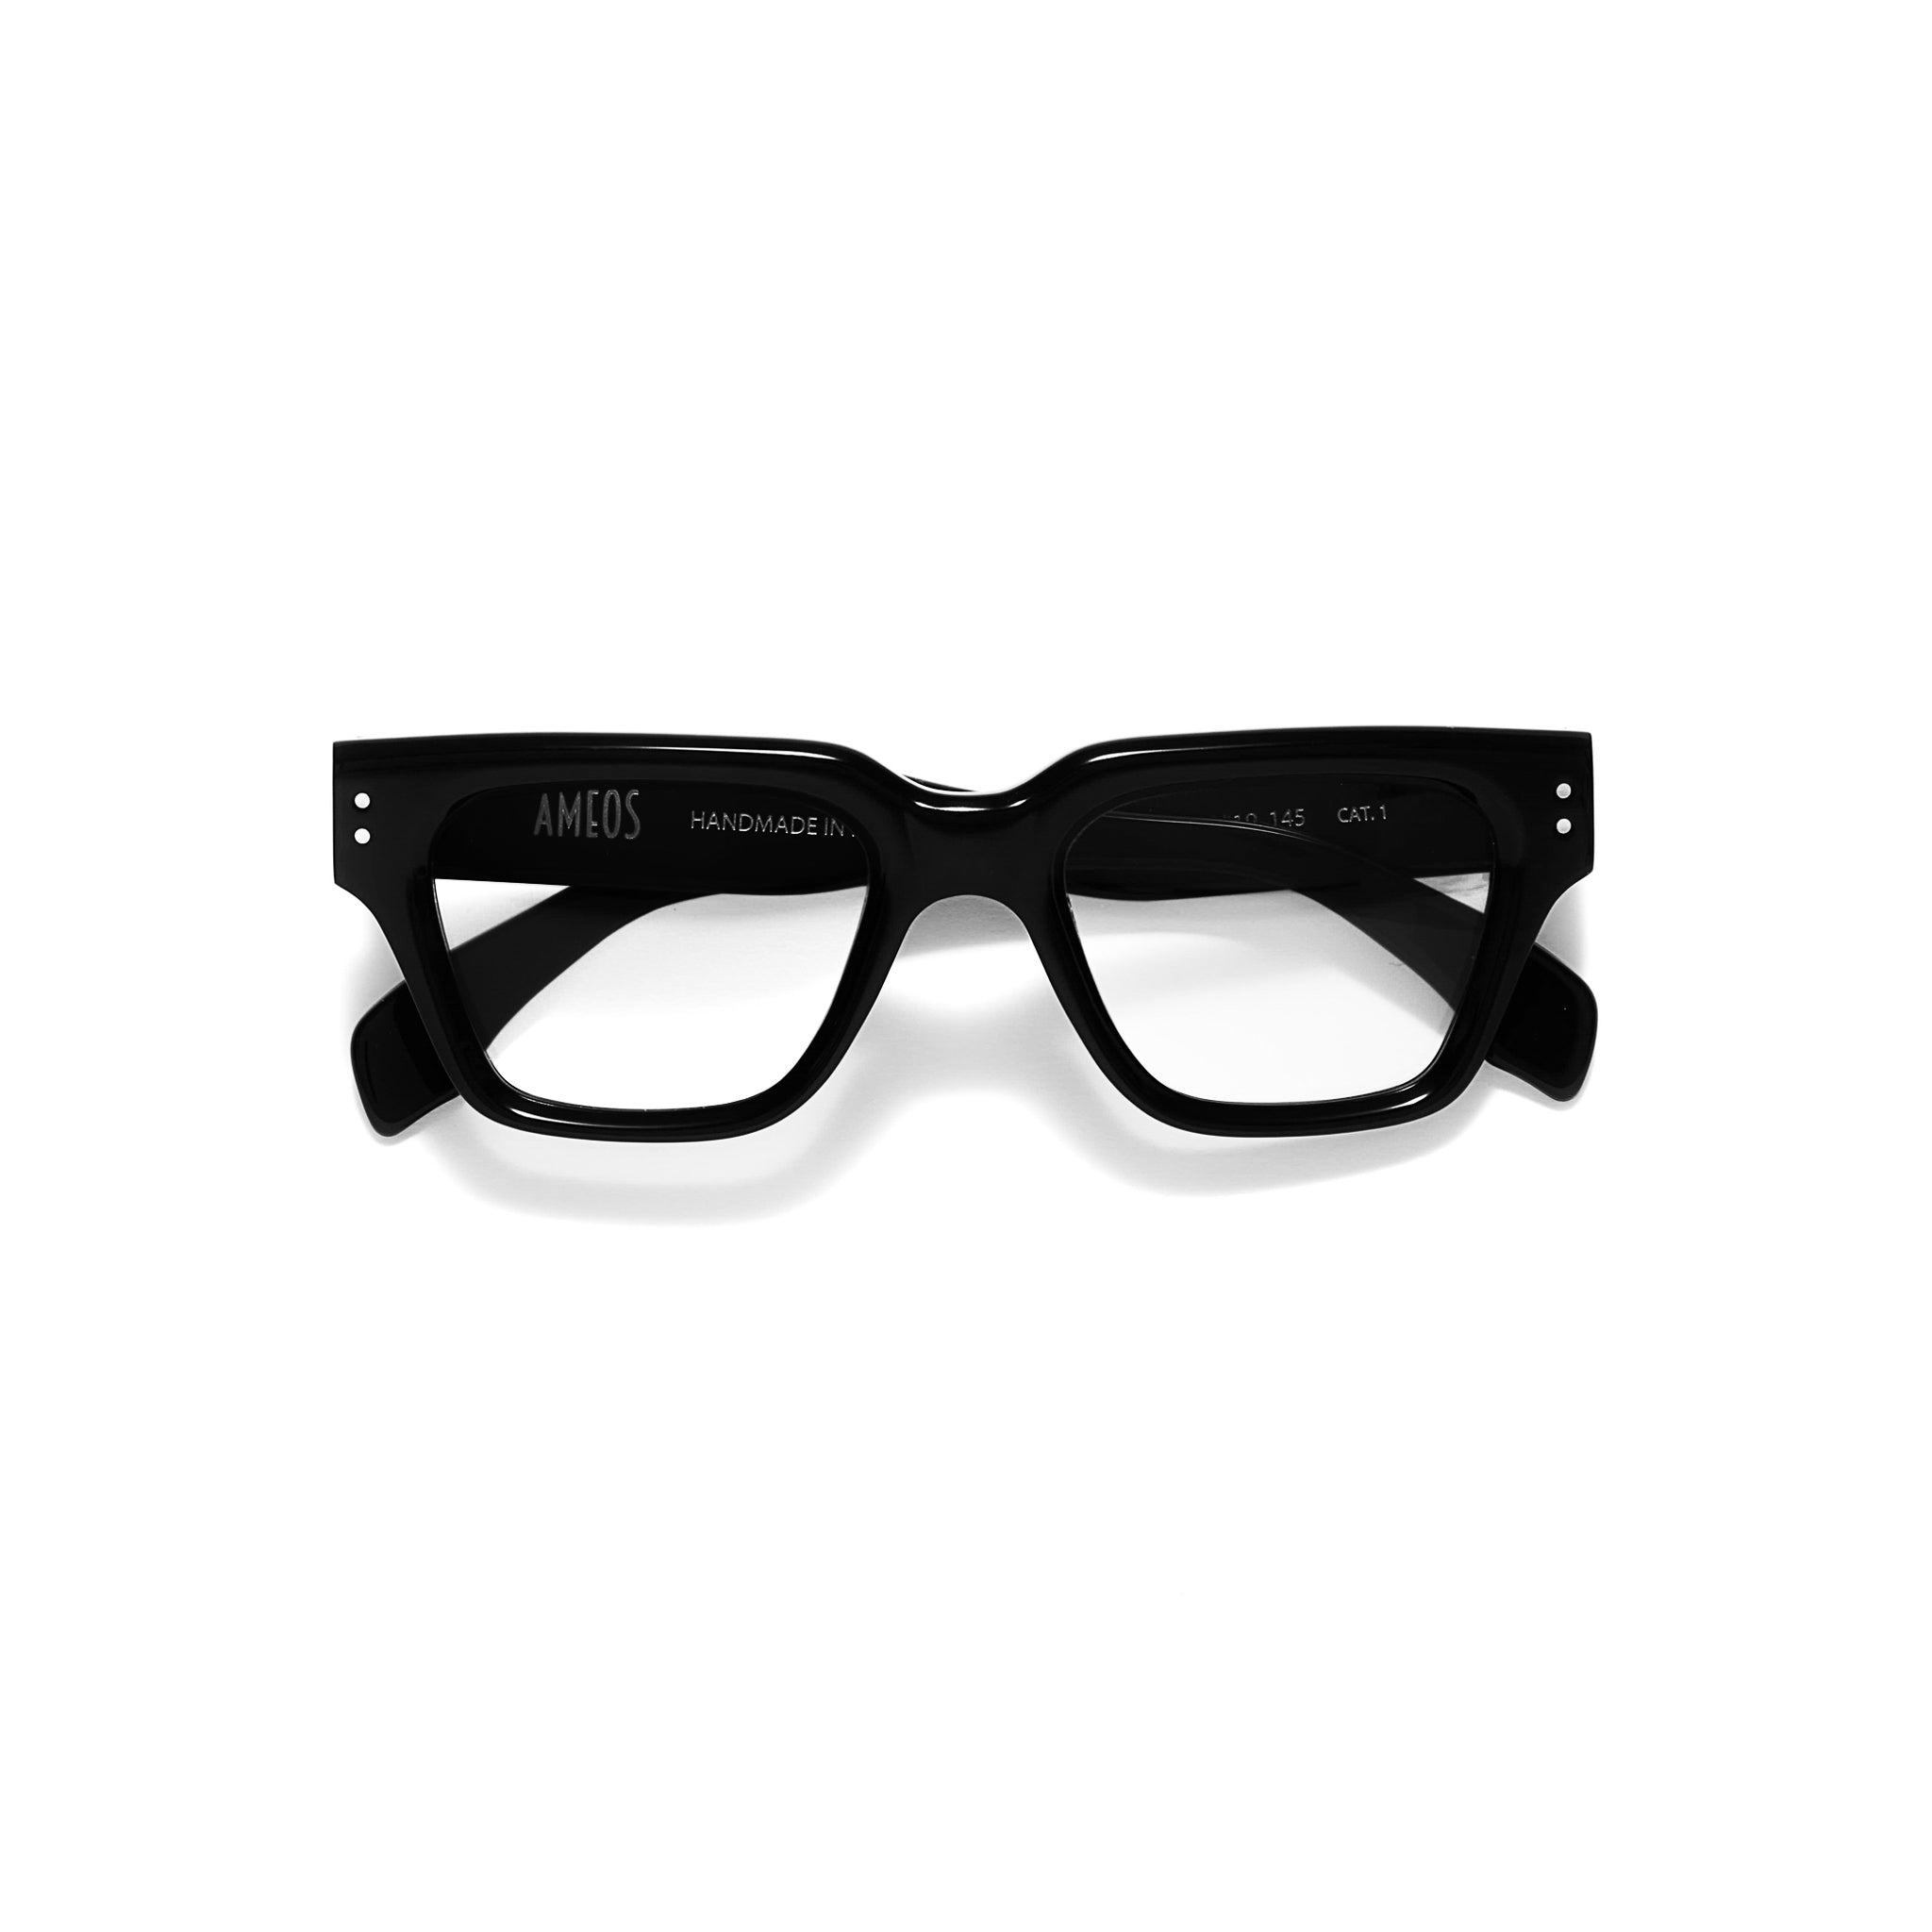 Ameos eyewear louis optical glasses in black frames. Unisex and handmade in italy.